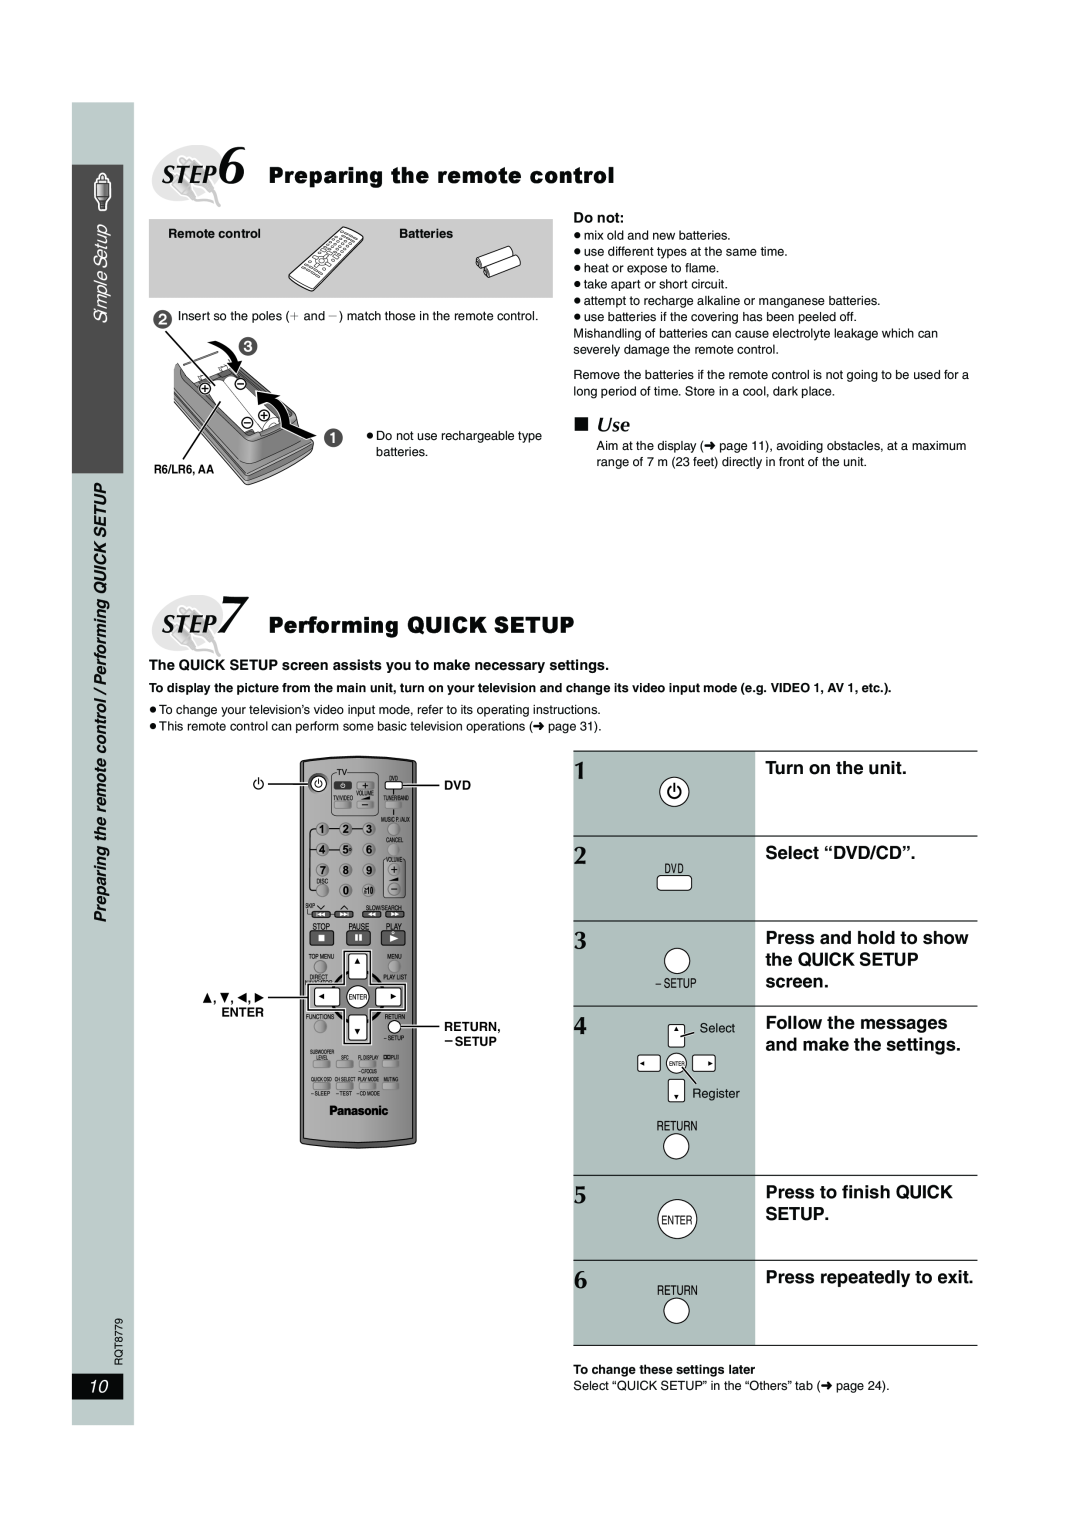 Panasonic SC-HT441W manual Preparing the remote control, Performing QUICK SETUP, Use, Friday,June9,20065 43PM, Simple Setup 